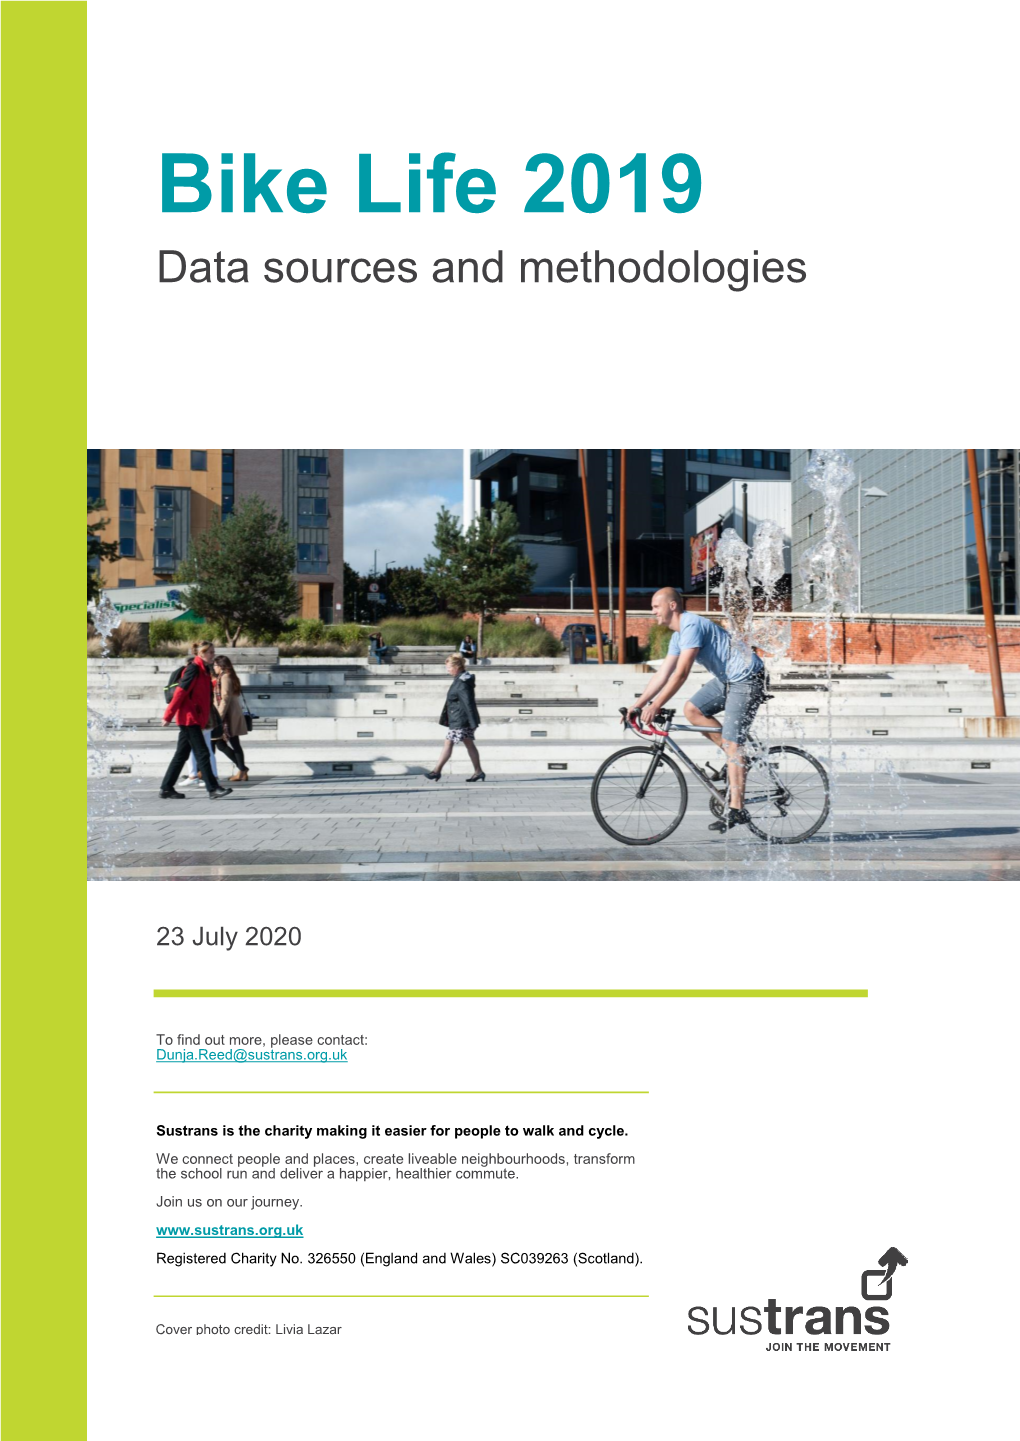 Bike Life 2019 Data Sources and Methodologies